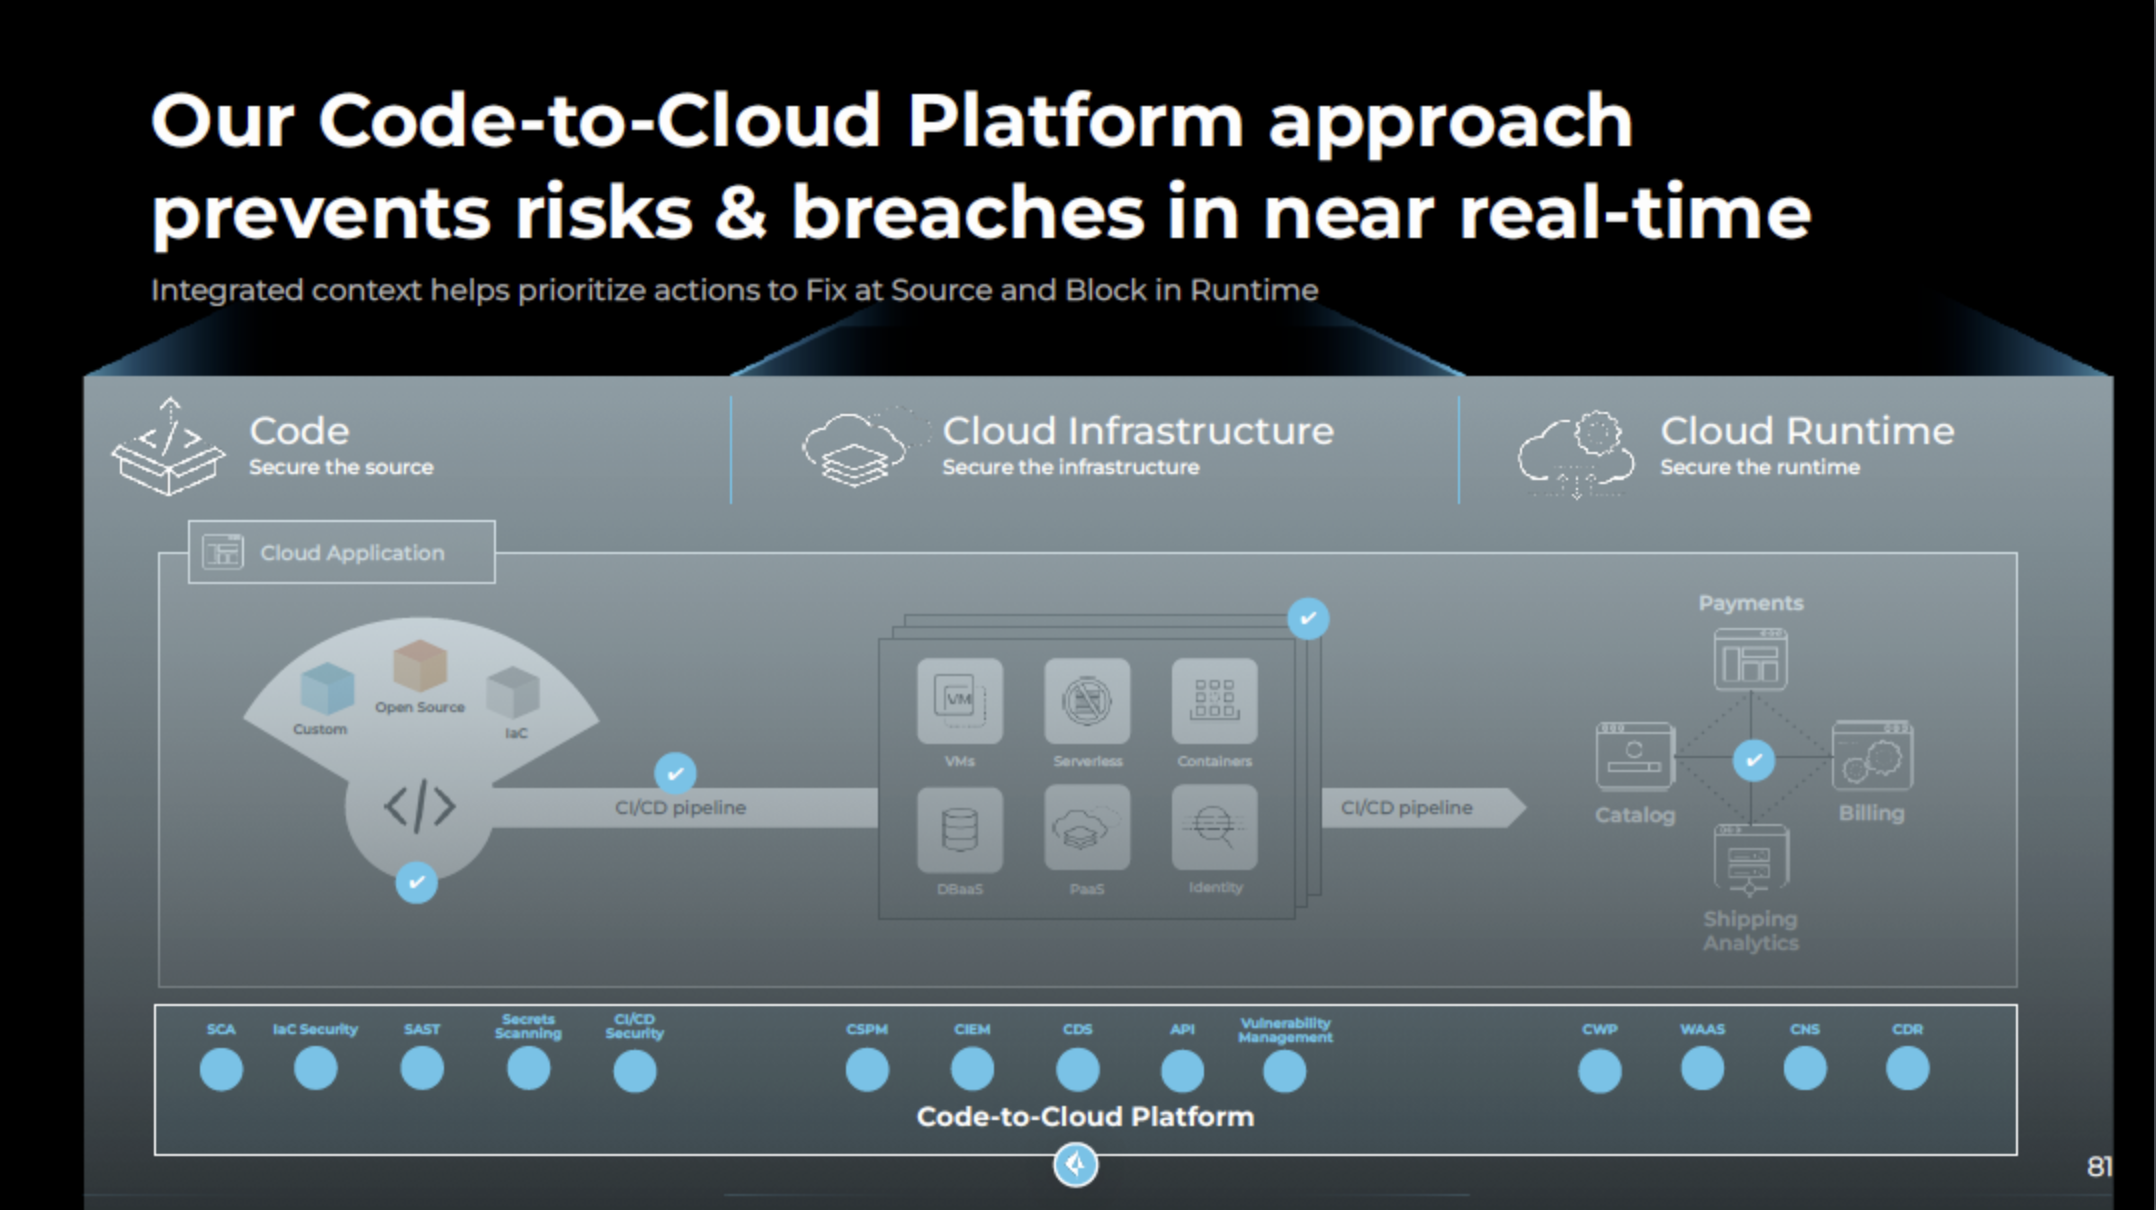 Palo Alto Networks code-to-cloud platform approach diagram